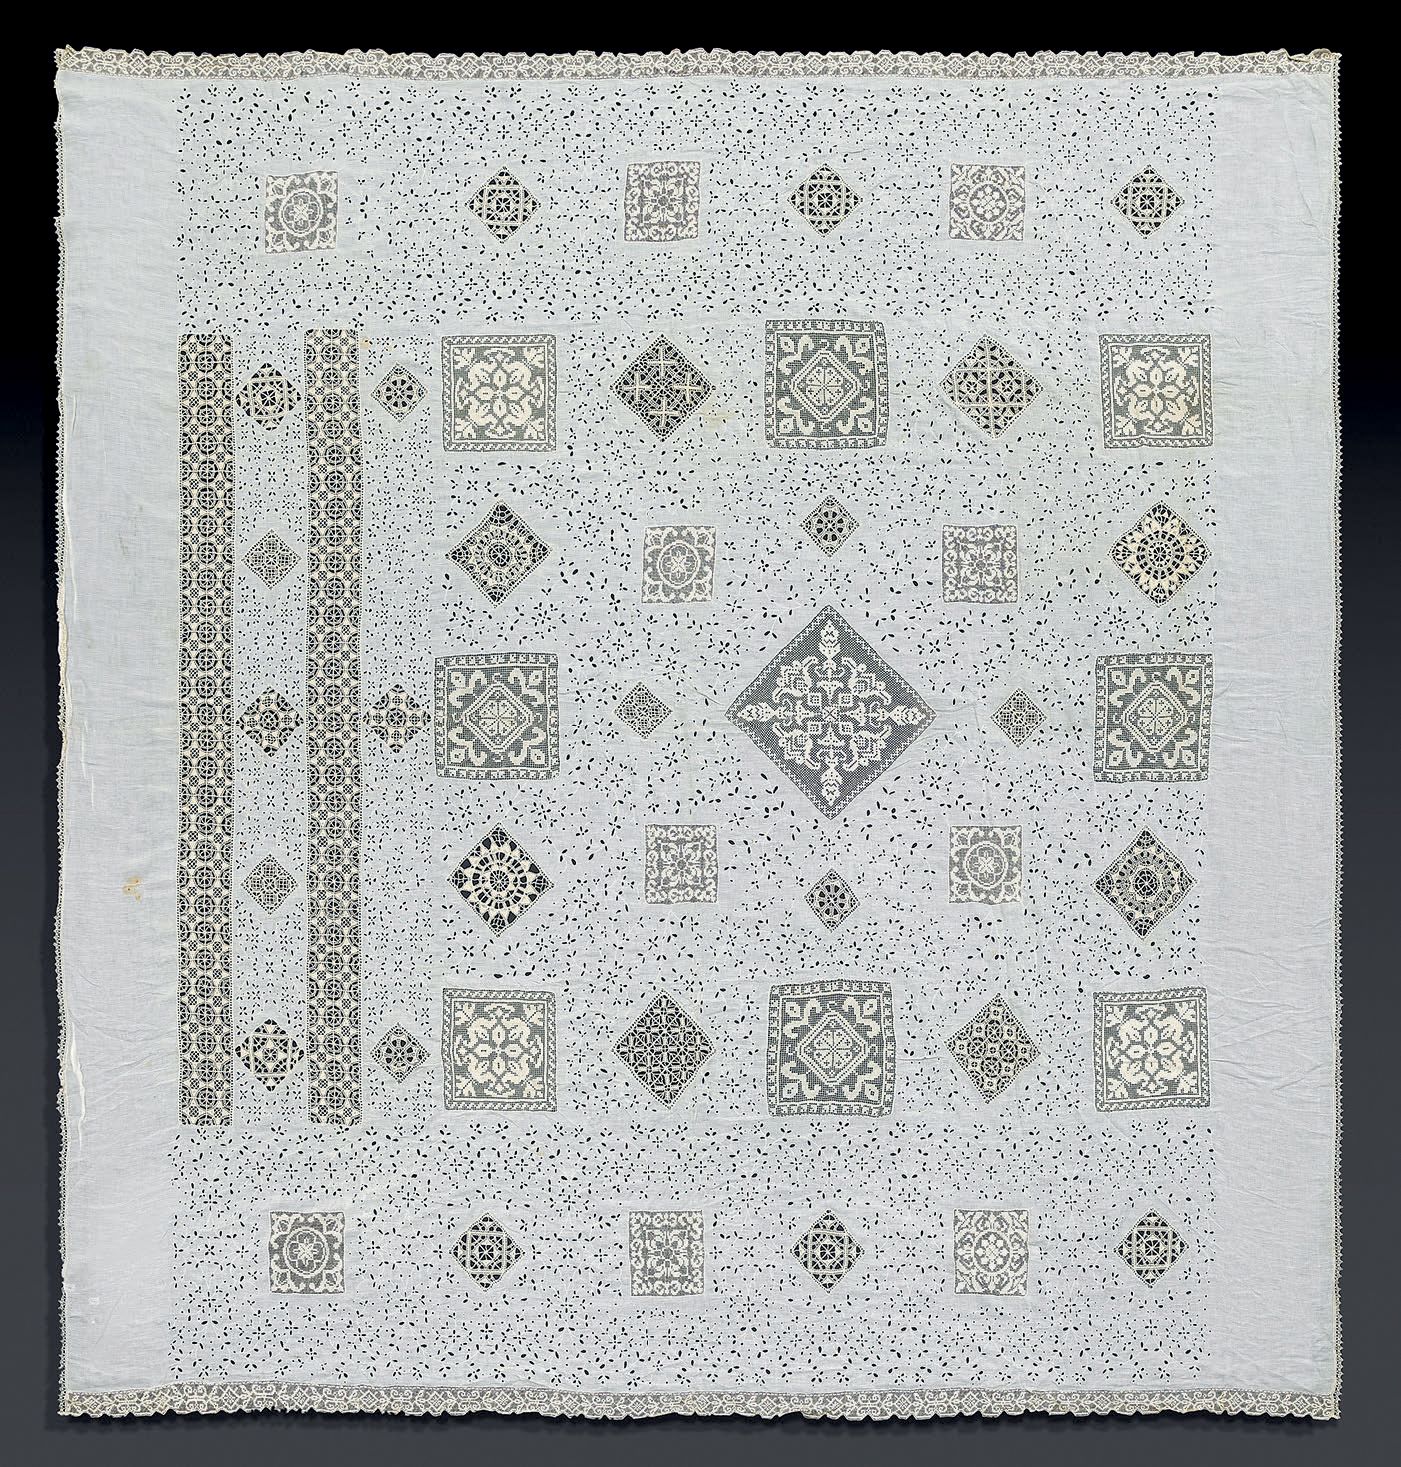 Null 大约在1900年，亚麻妆奁桌布或床罩，英式刺绣，网状刺绣和Reticella à l'aiguille。
田野上装饰着优雅的英式刺绣卷轴，上面镶嵌着交&hellip;